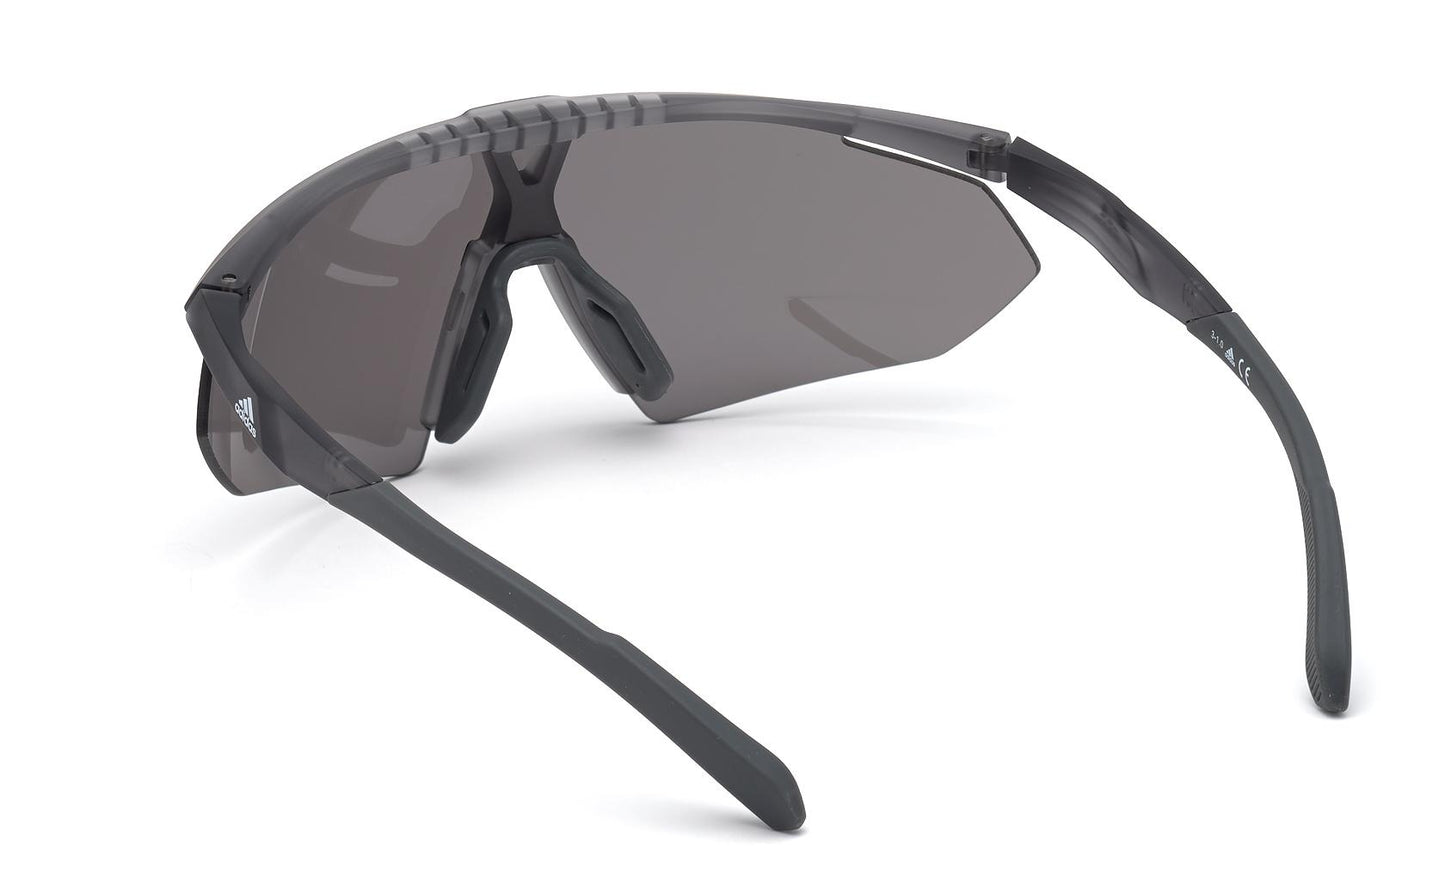 Adidas Sport Sunglasses 20C GREY/OTHER